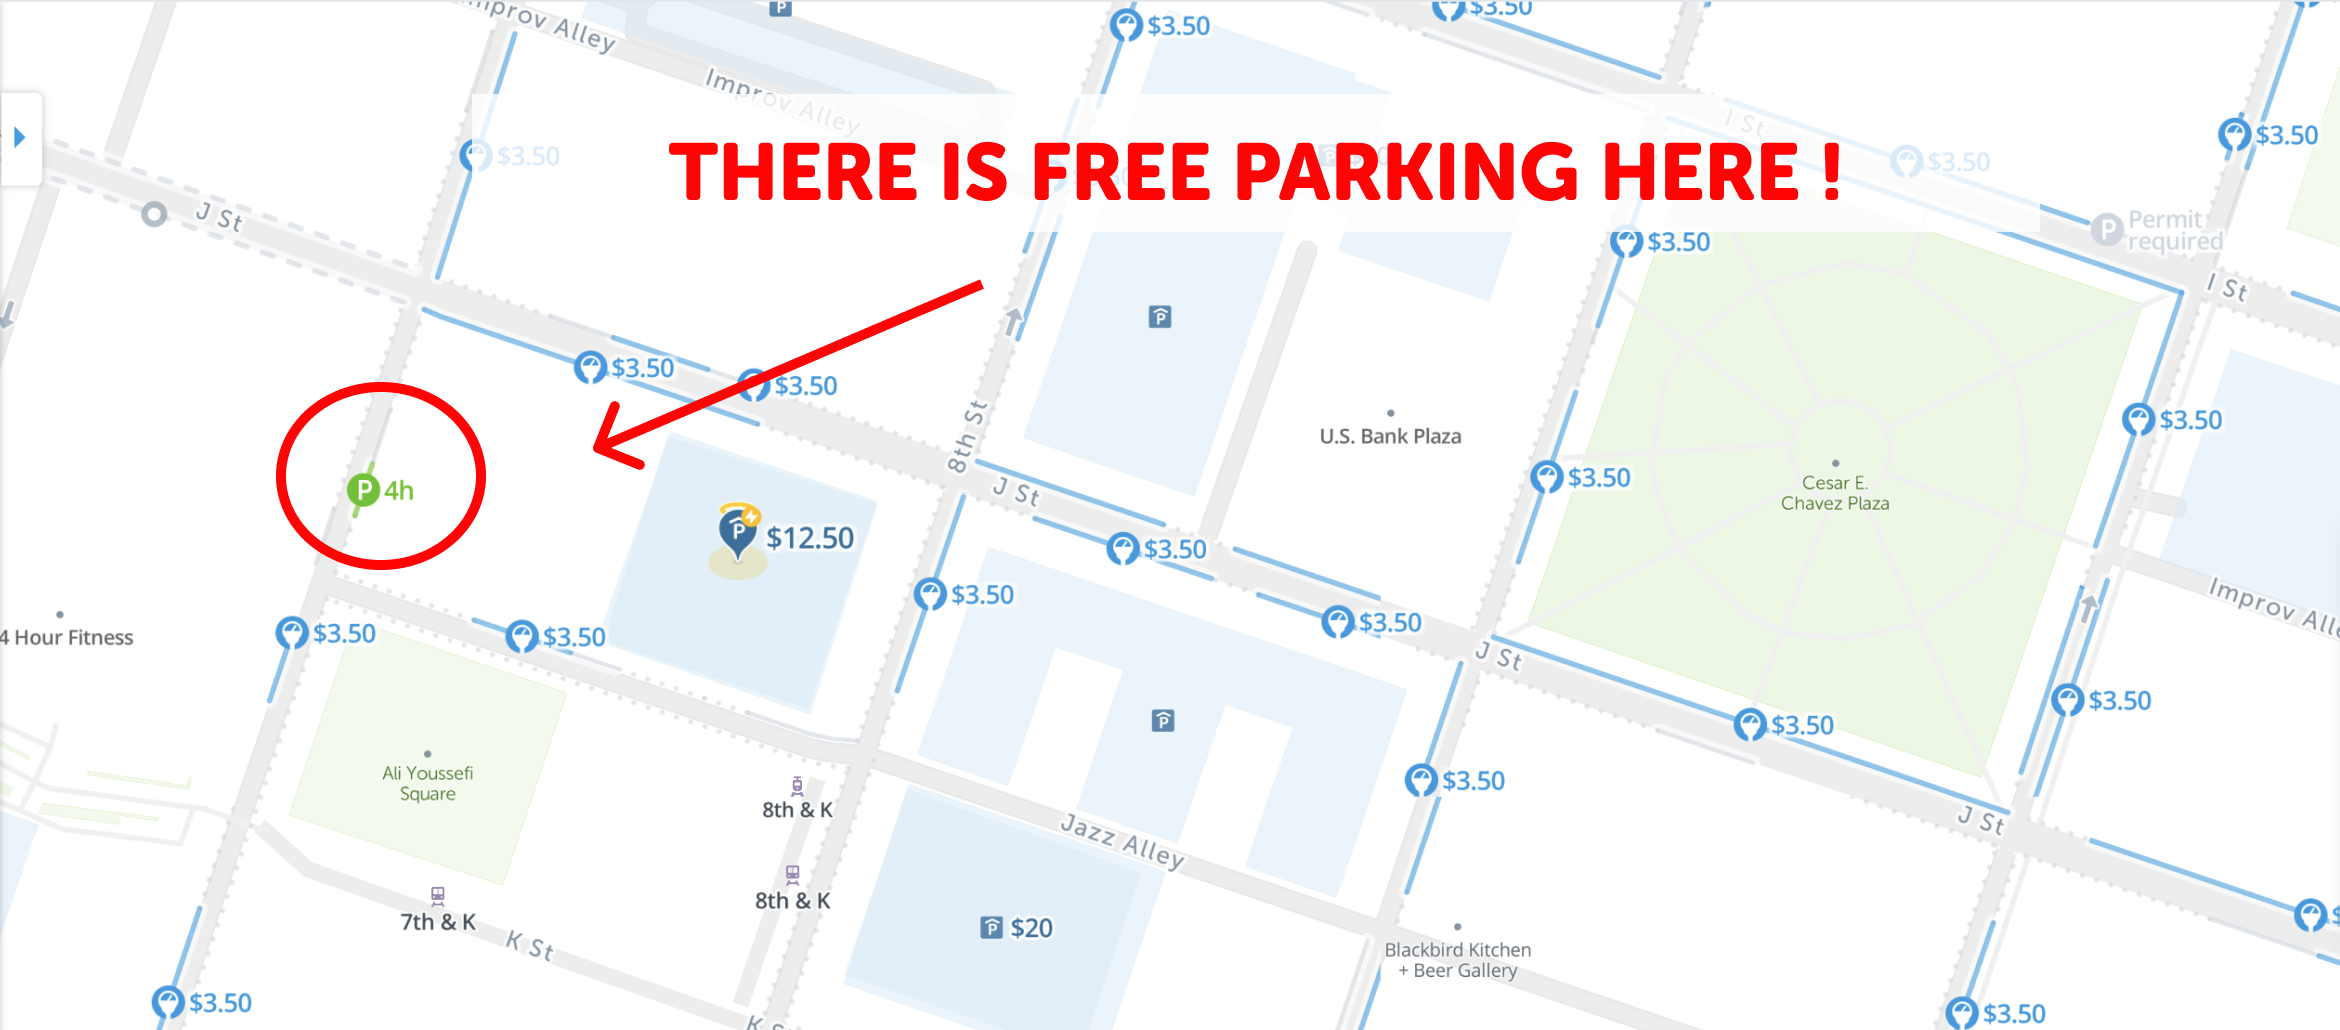 map of free parking in Sacramento - SpotAngels